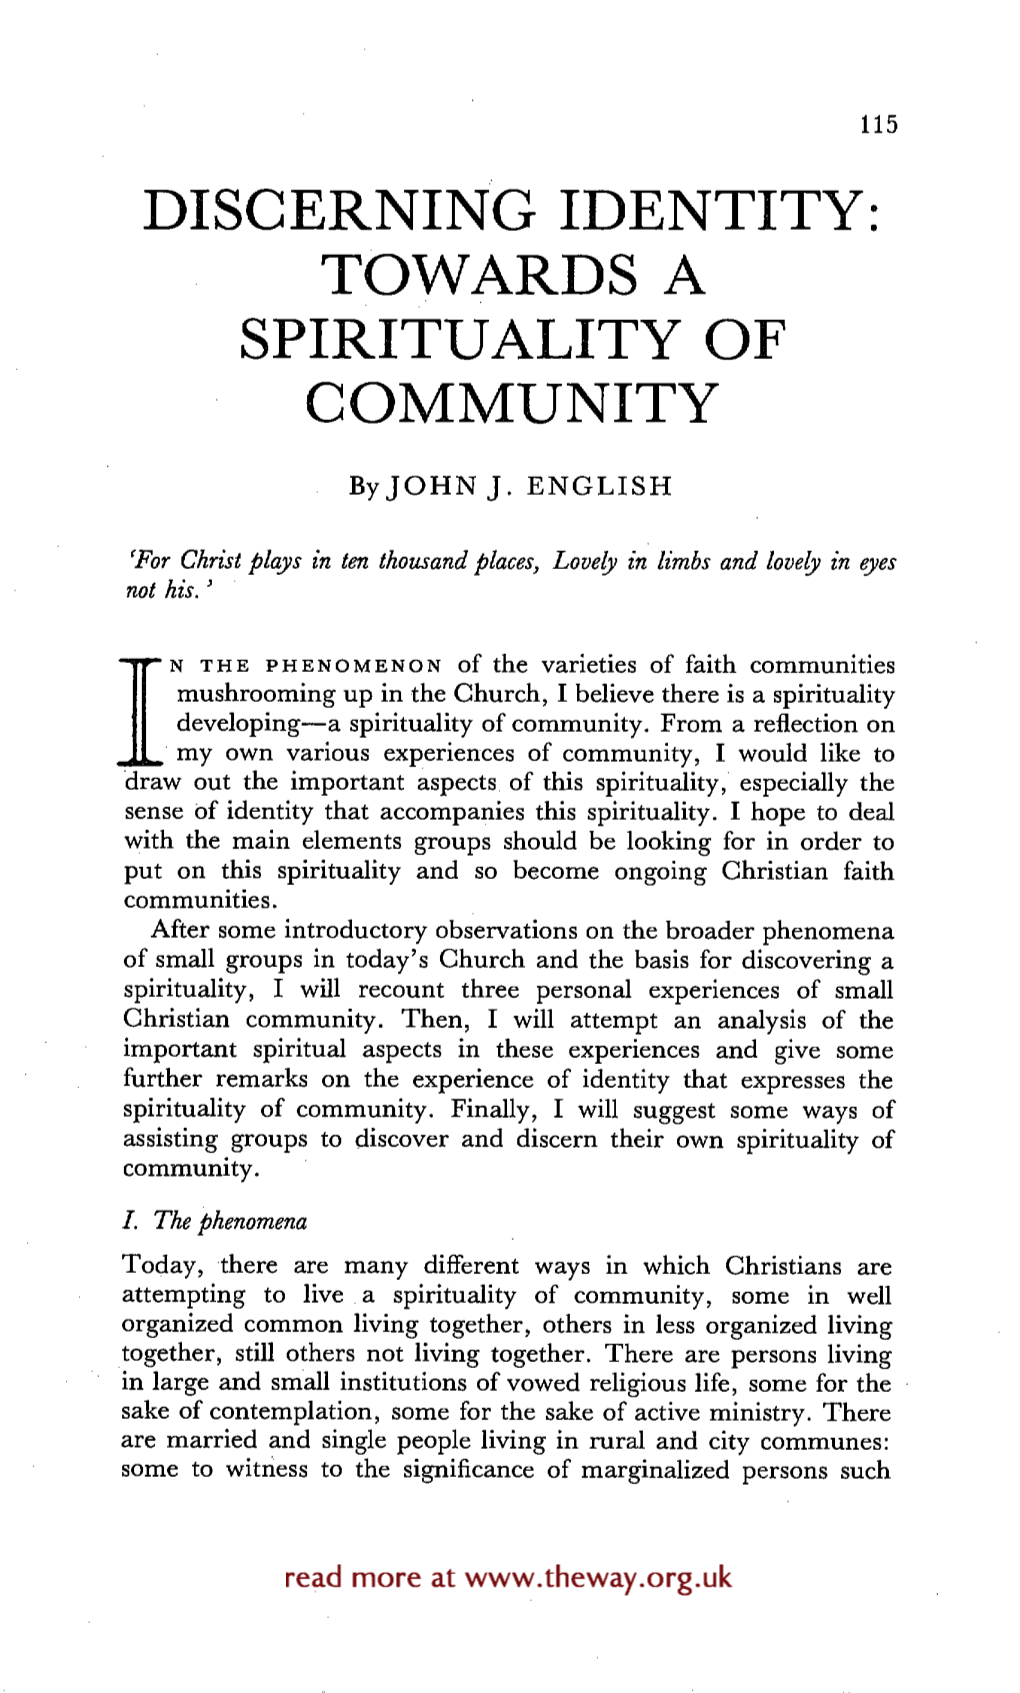 Discerning Identity: Towards a Spirituality of Community